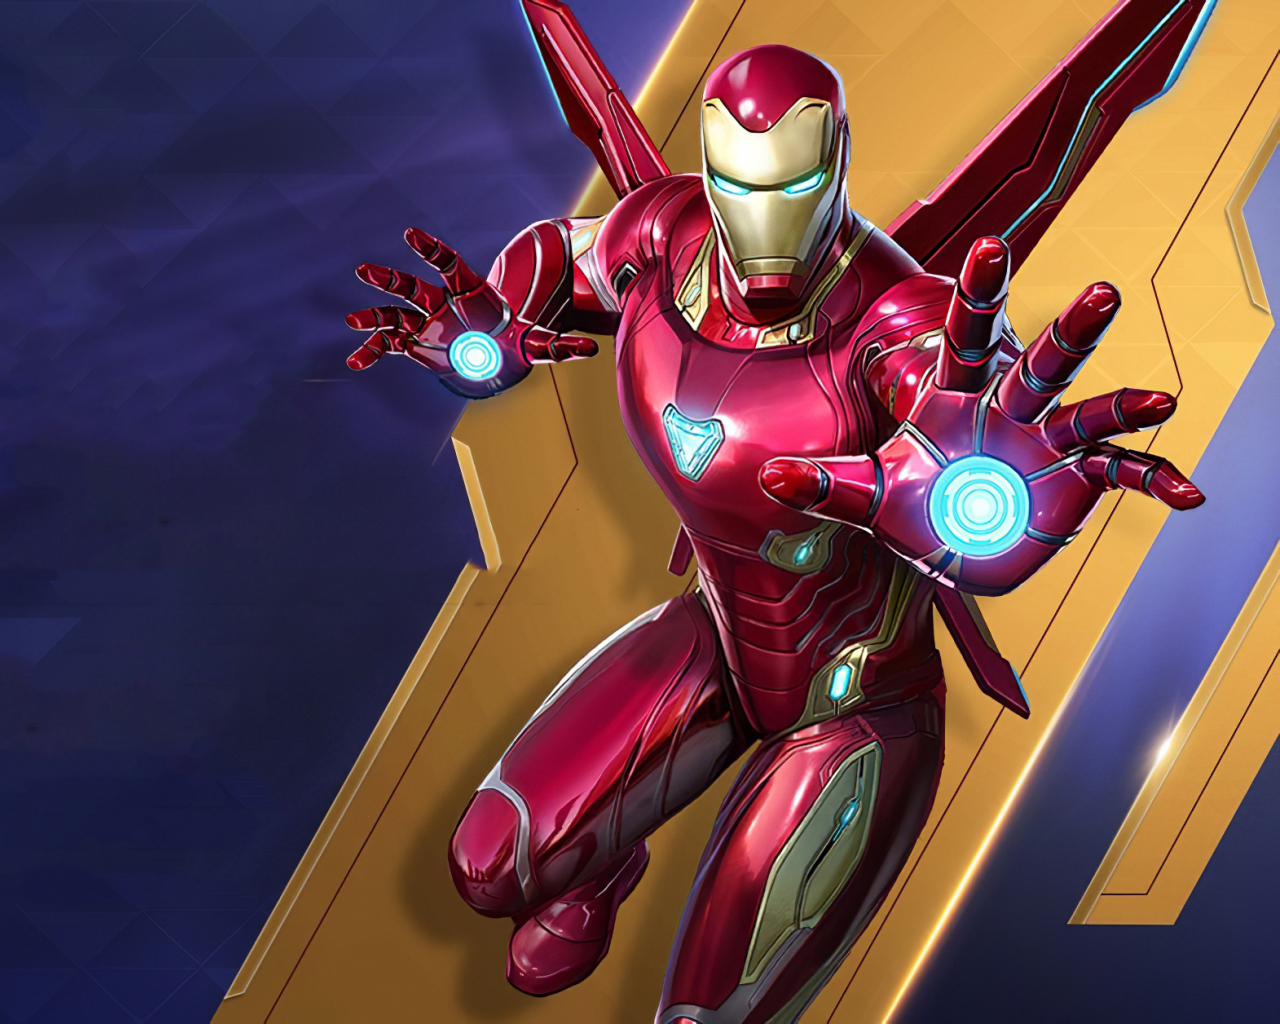 Destop Wallpaper Iron Man : 35 Iron Man HD Wallpapers for Desktop